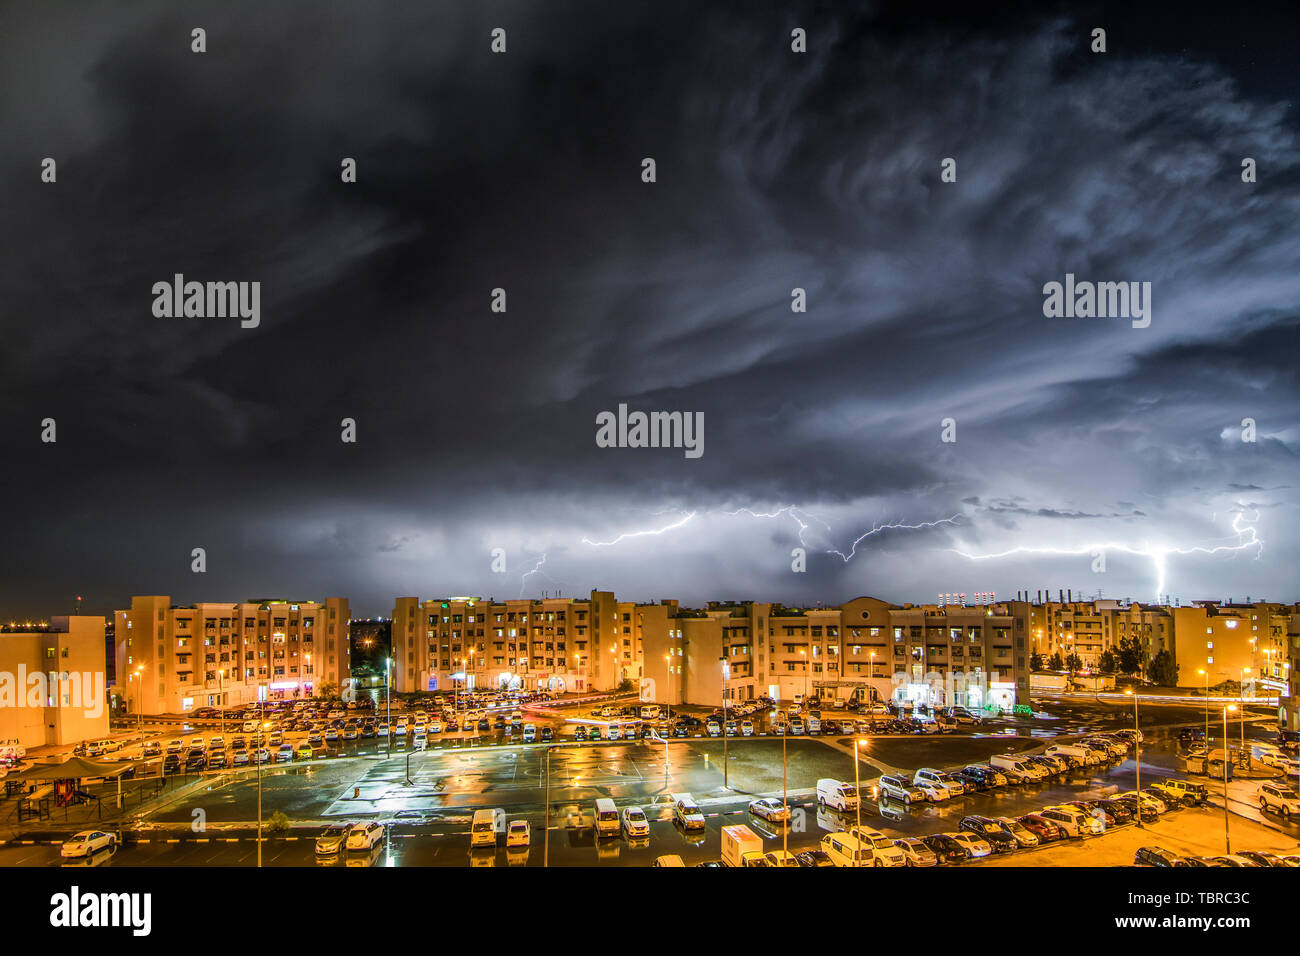 A thunderous city. Stock Photo